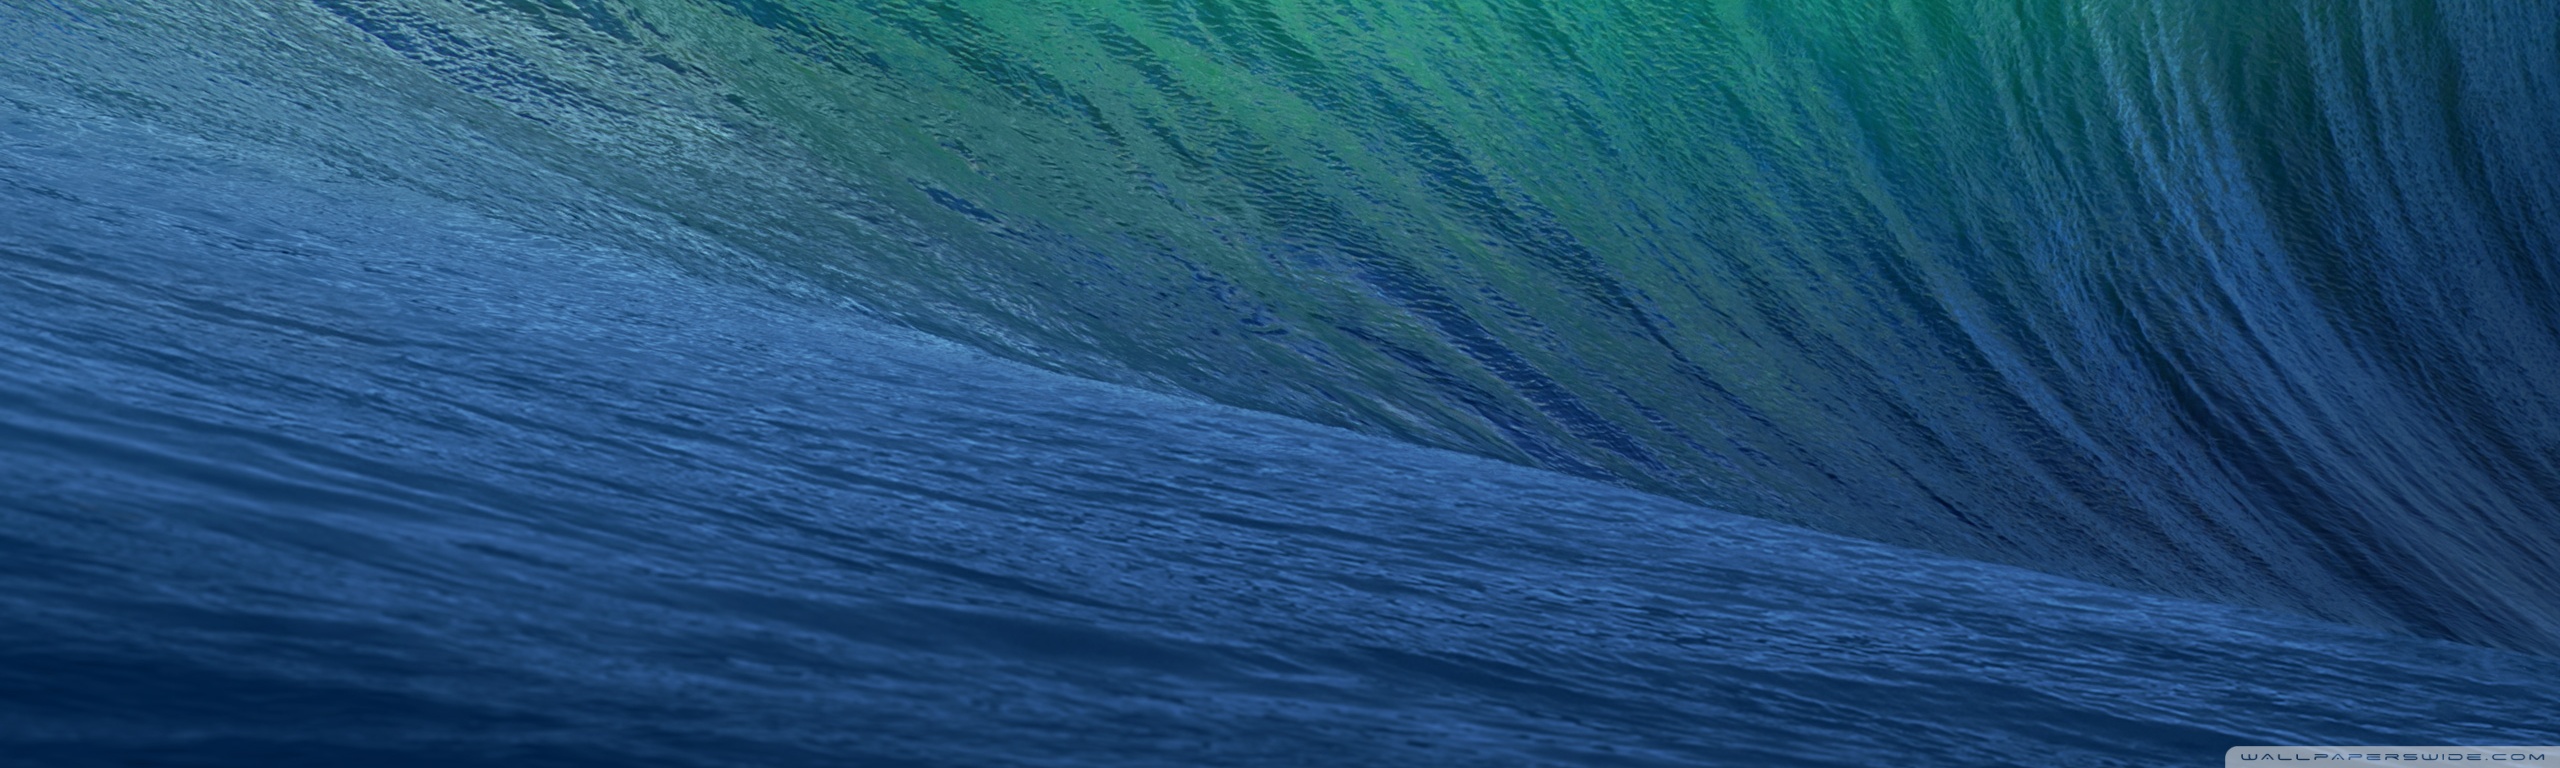 fond d'écran os x mavericks,bleu,vert,aqua,vague,turquoise